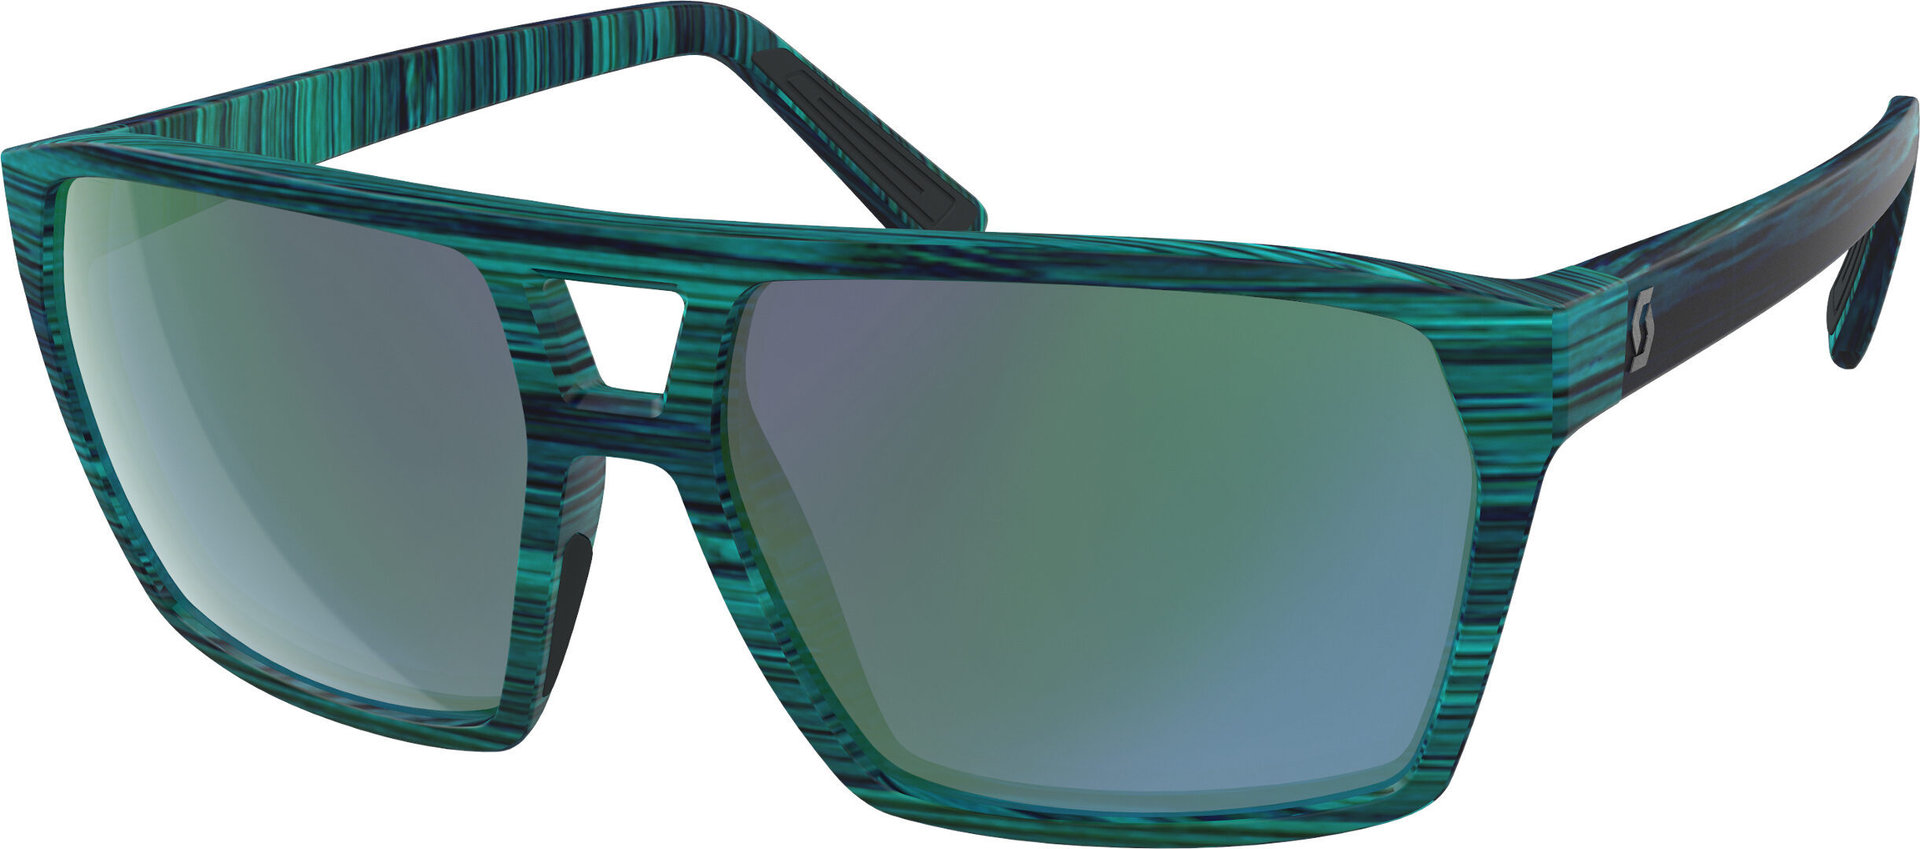 Scott Tune Sunglasses, green-blue, green-blue, Size One Size